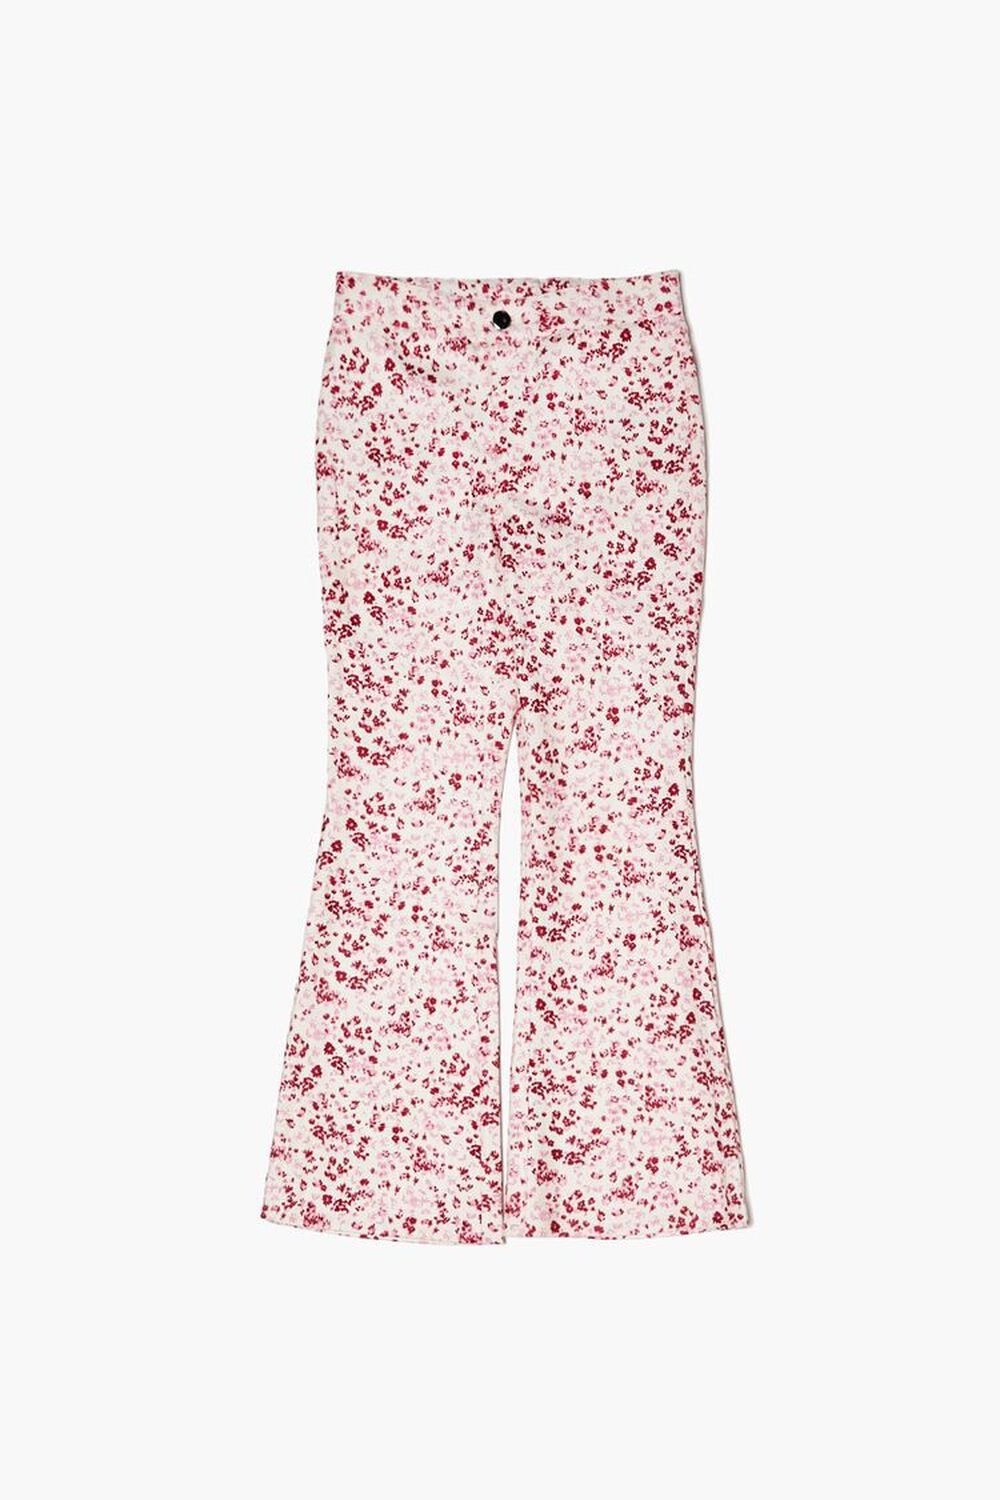 PINK/MULTI Girls Floral Print Flare Pants (Kids), image 1